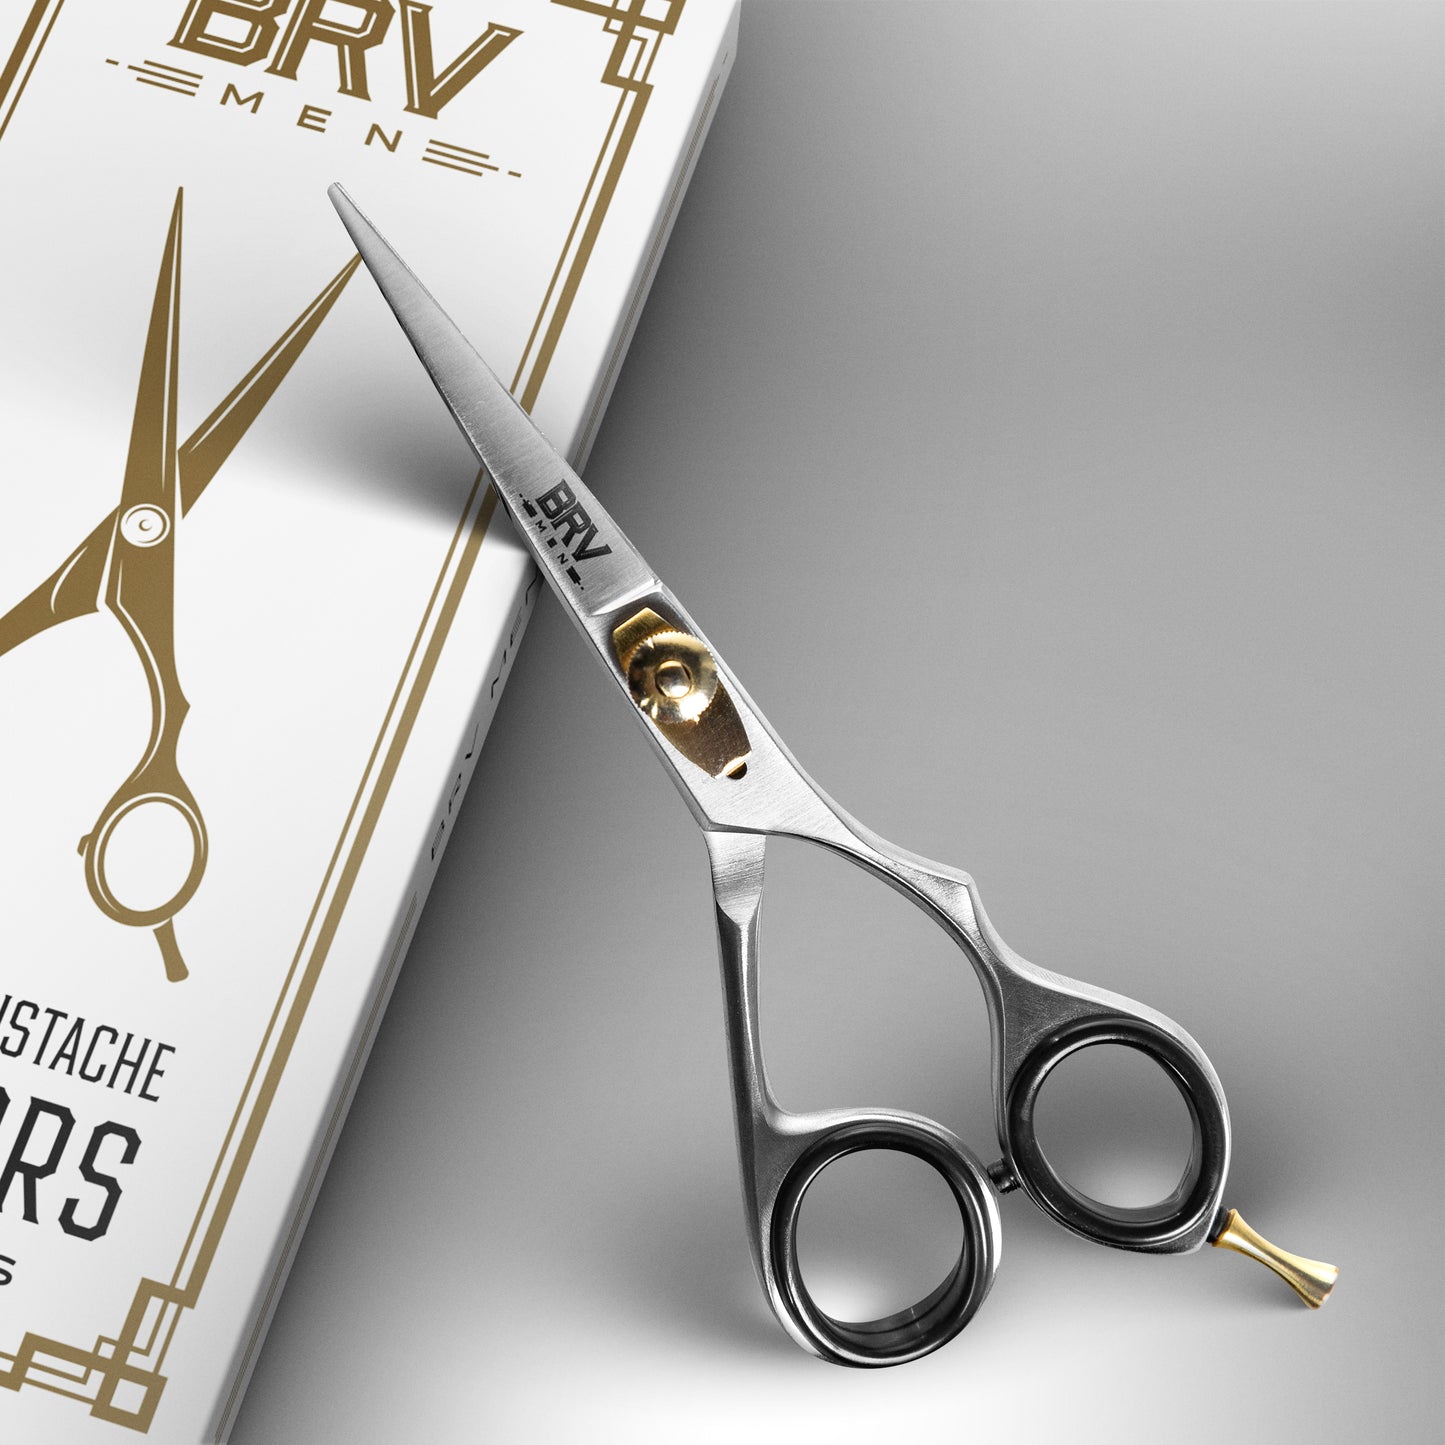 
                  
                    BRV MEN Professional Hammer Forged Mustache & Beard Scissors - 5.5" - 100% Stainless Steel - Razor Sharp Facial Hair Trimming Shears (RIGHT HANDED - silver)
                  
                